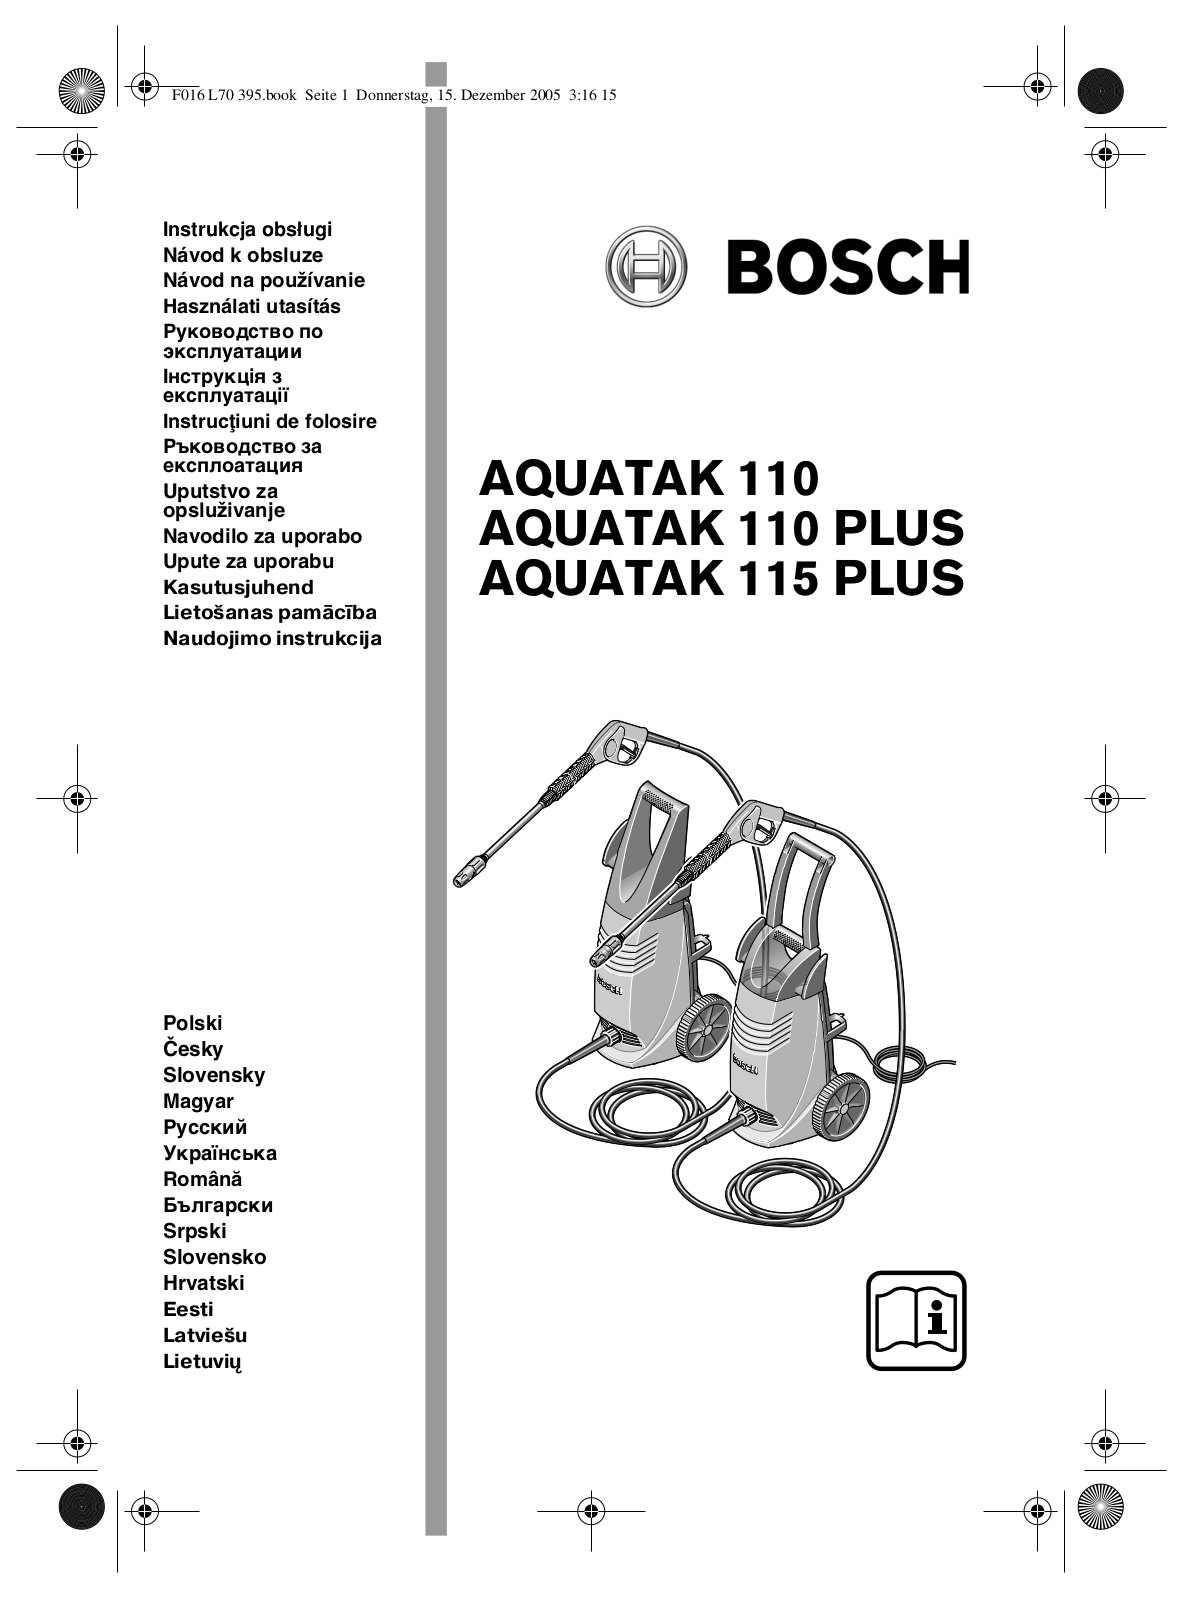 Bosch Aquatak 110 Plus User Manual